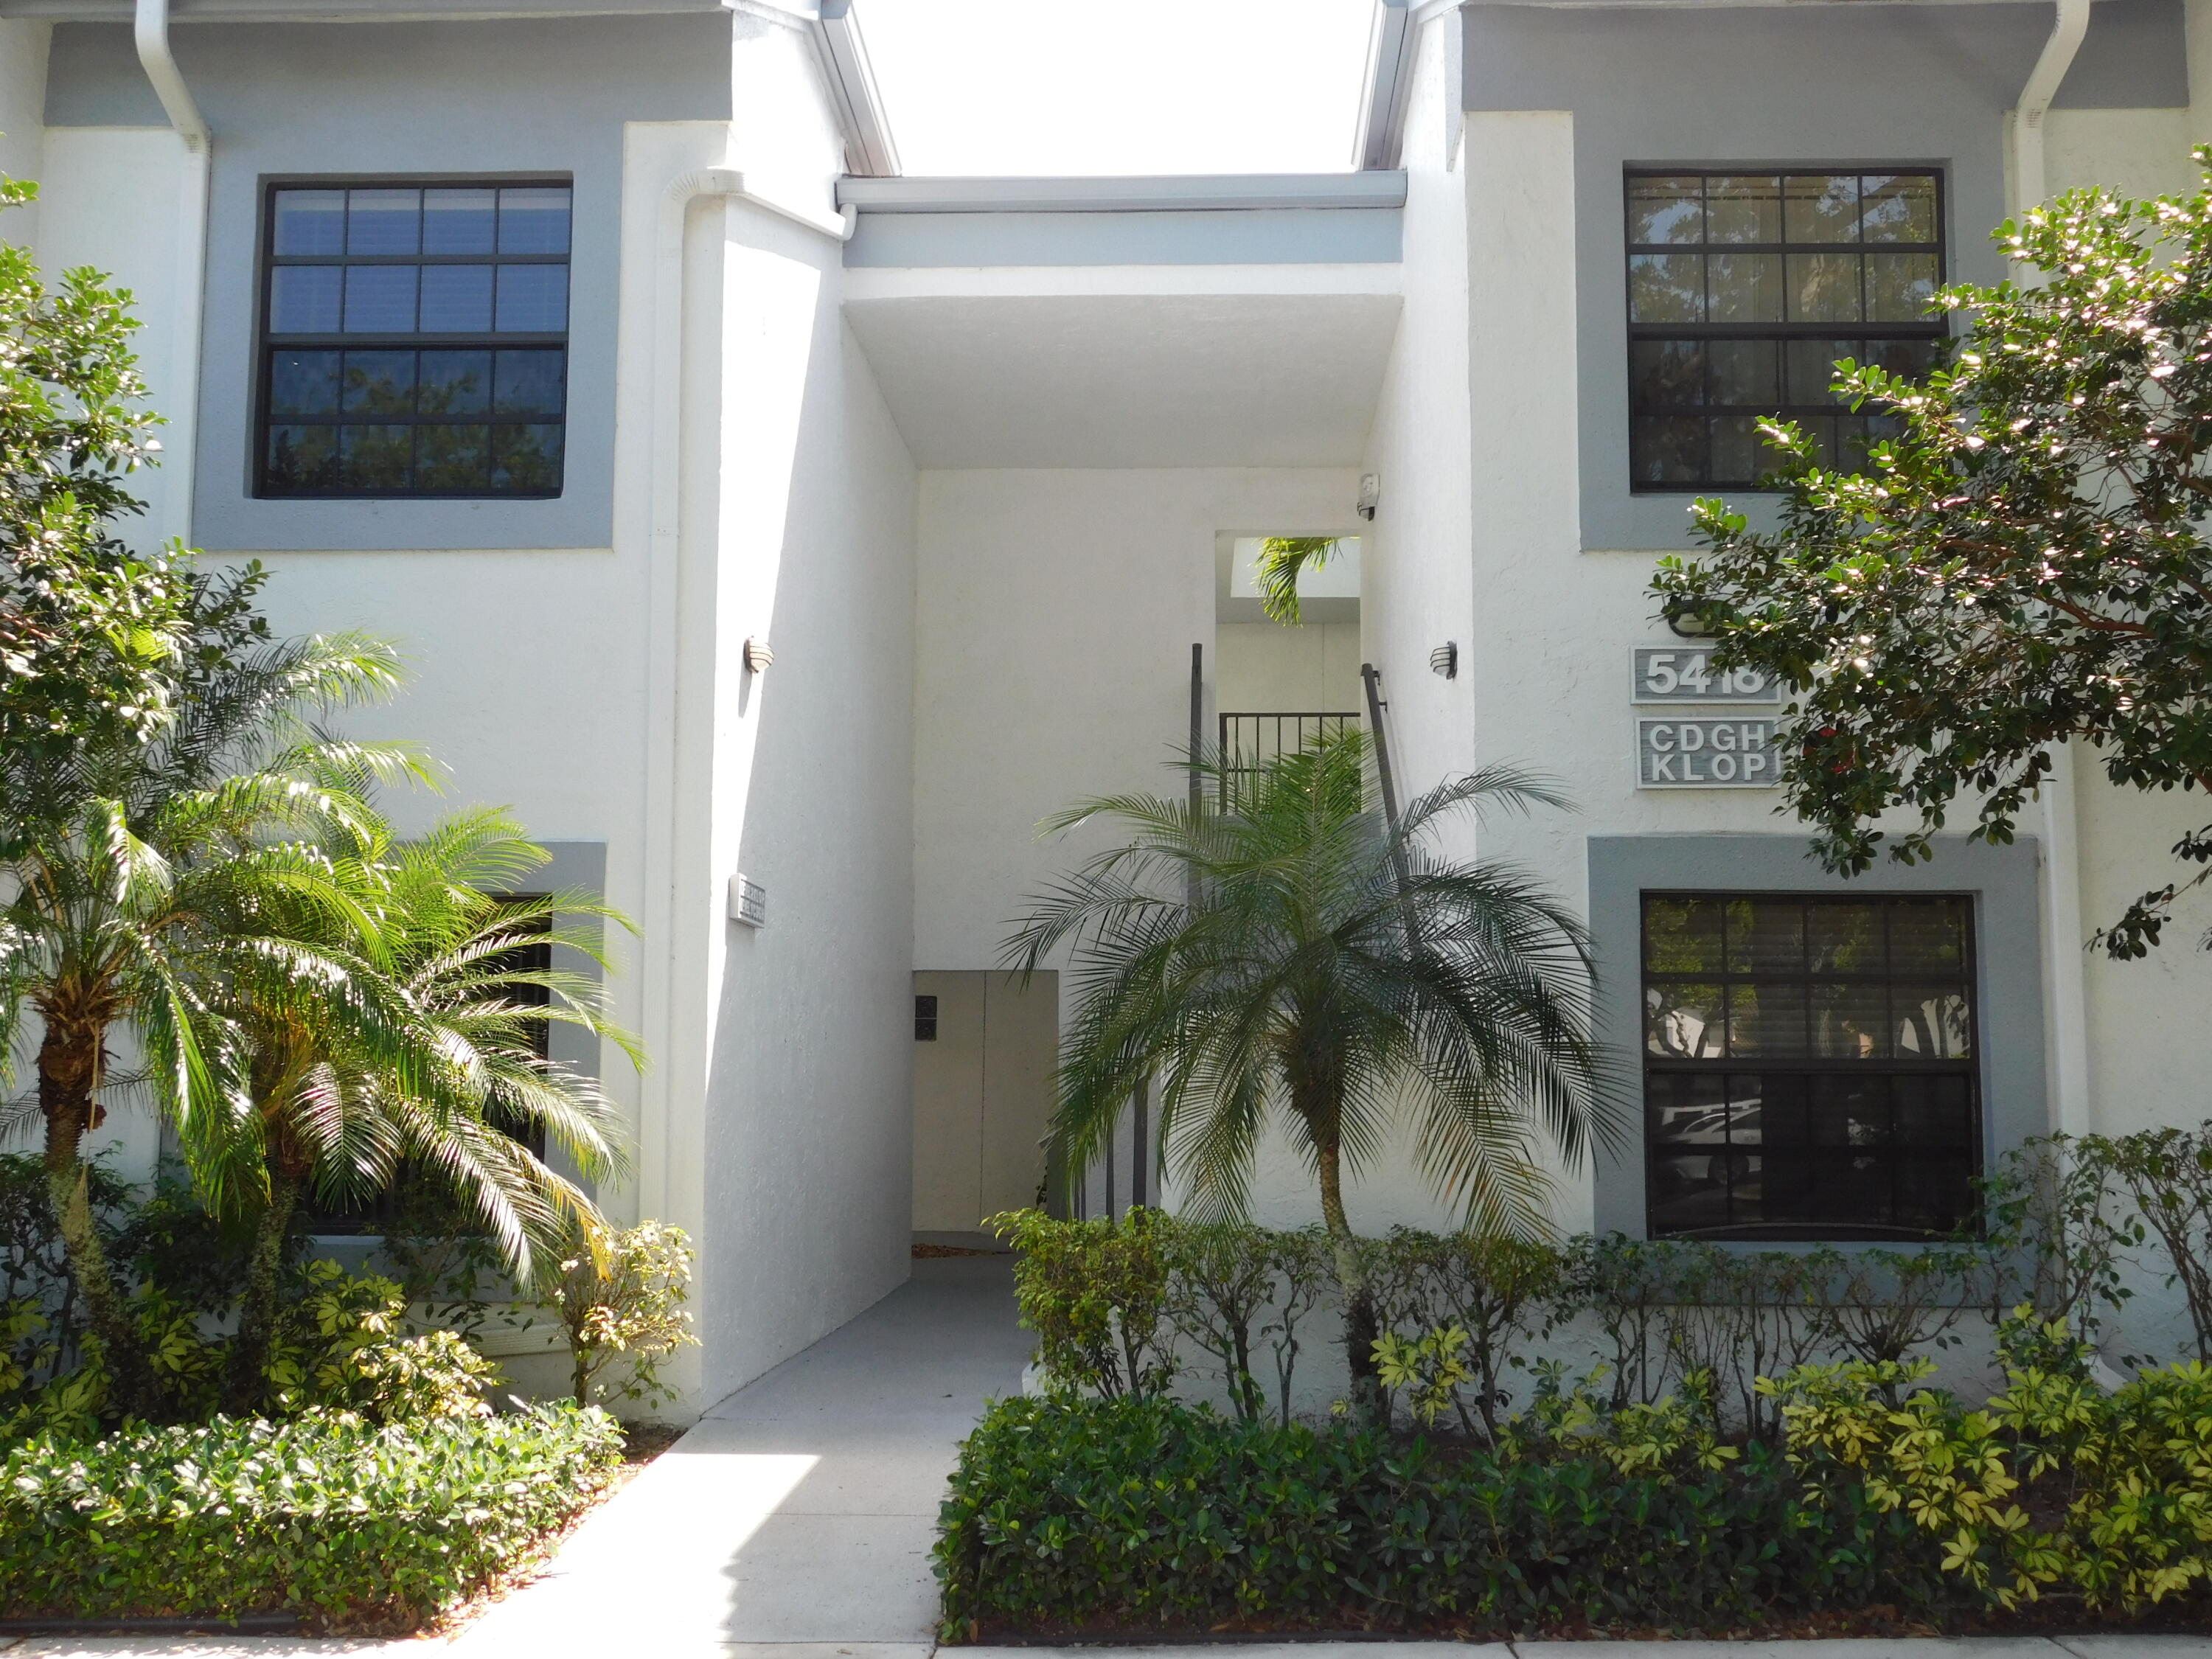 Property for Sale at 5418 Firenze Drive H, Boynton Beach, Palm Beach County, Florida - Bedrooms: 2 
Bathrooms: 2  - $265,000